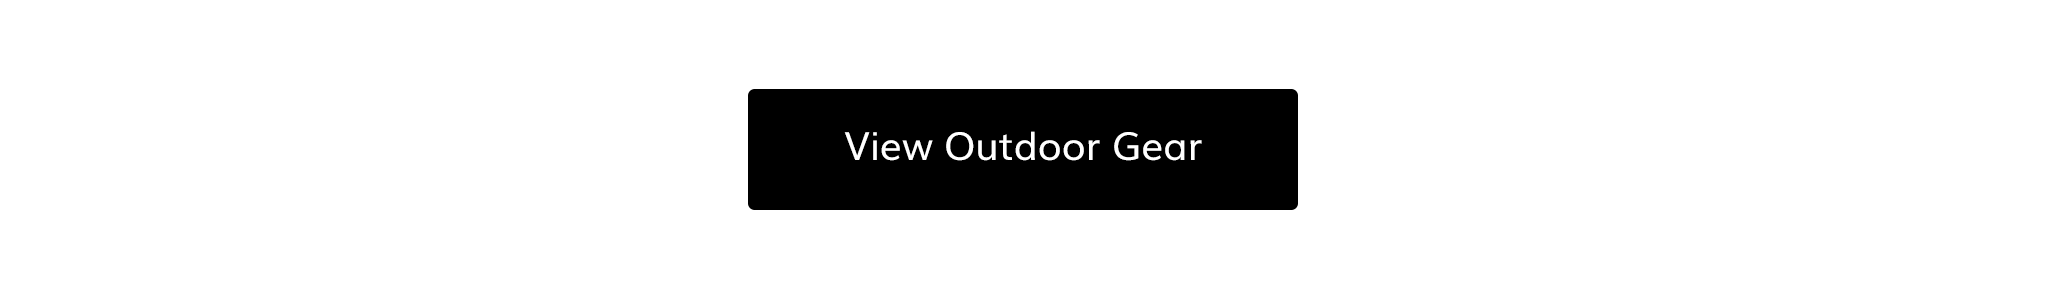 View Outdoor Gear